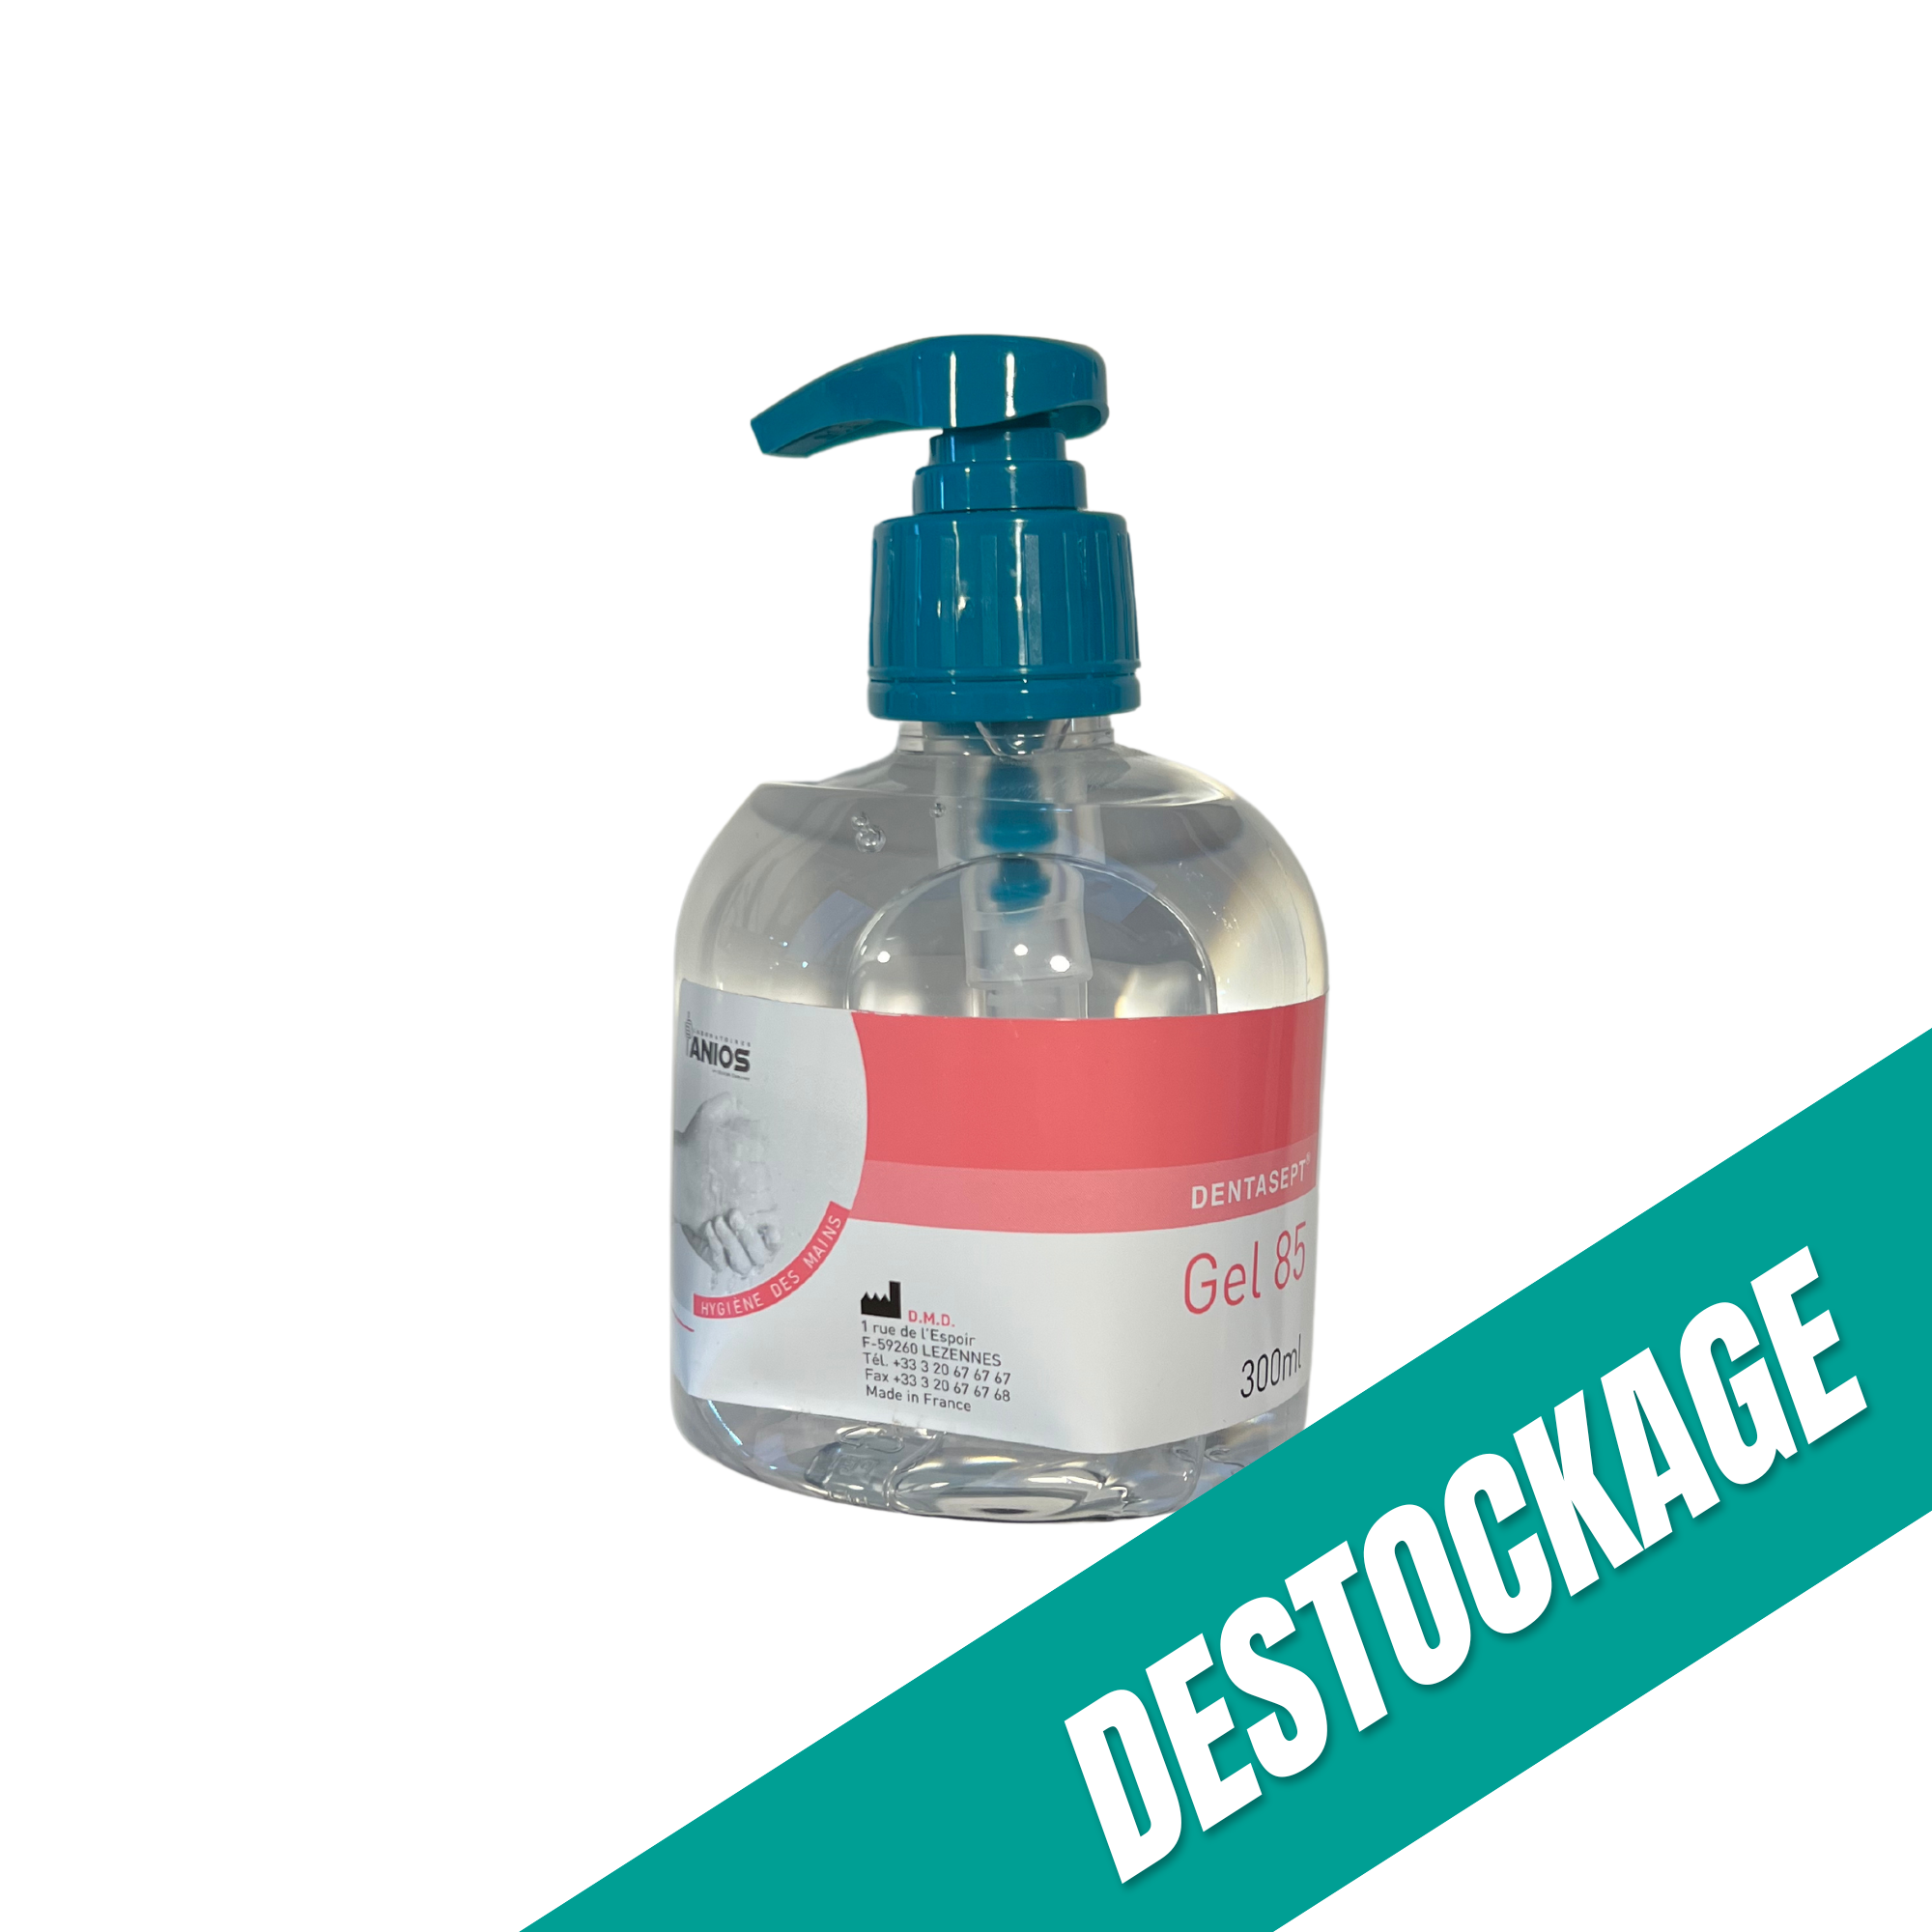 Dentasept Gel 85 - Gel désinfectant pour friction hydroalcoolique - 300 ml // Destockage